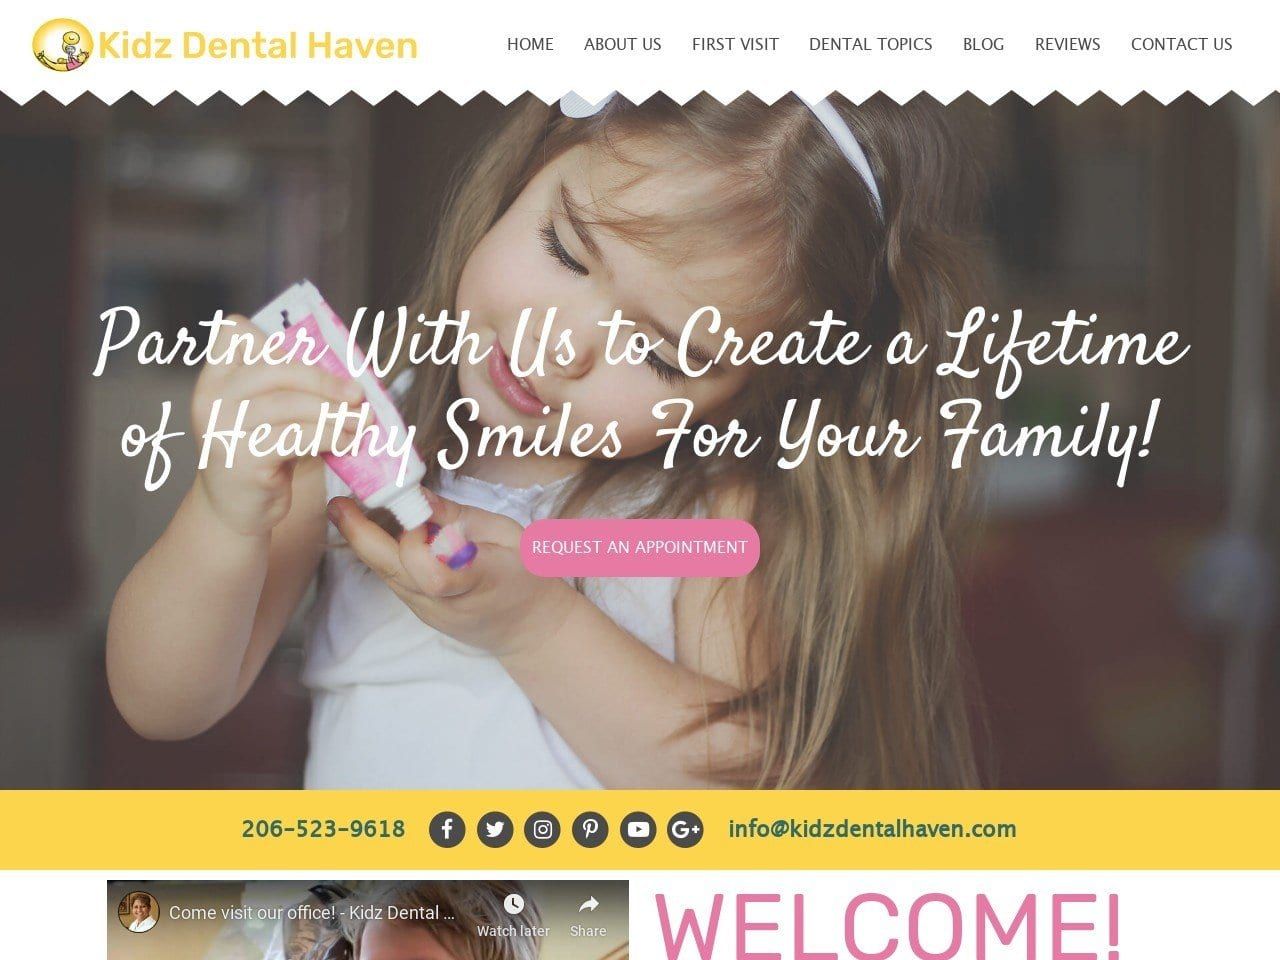 Kidz Dental Haven Website Screenshot from kidzdentalhaven.com